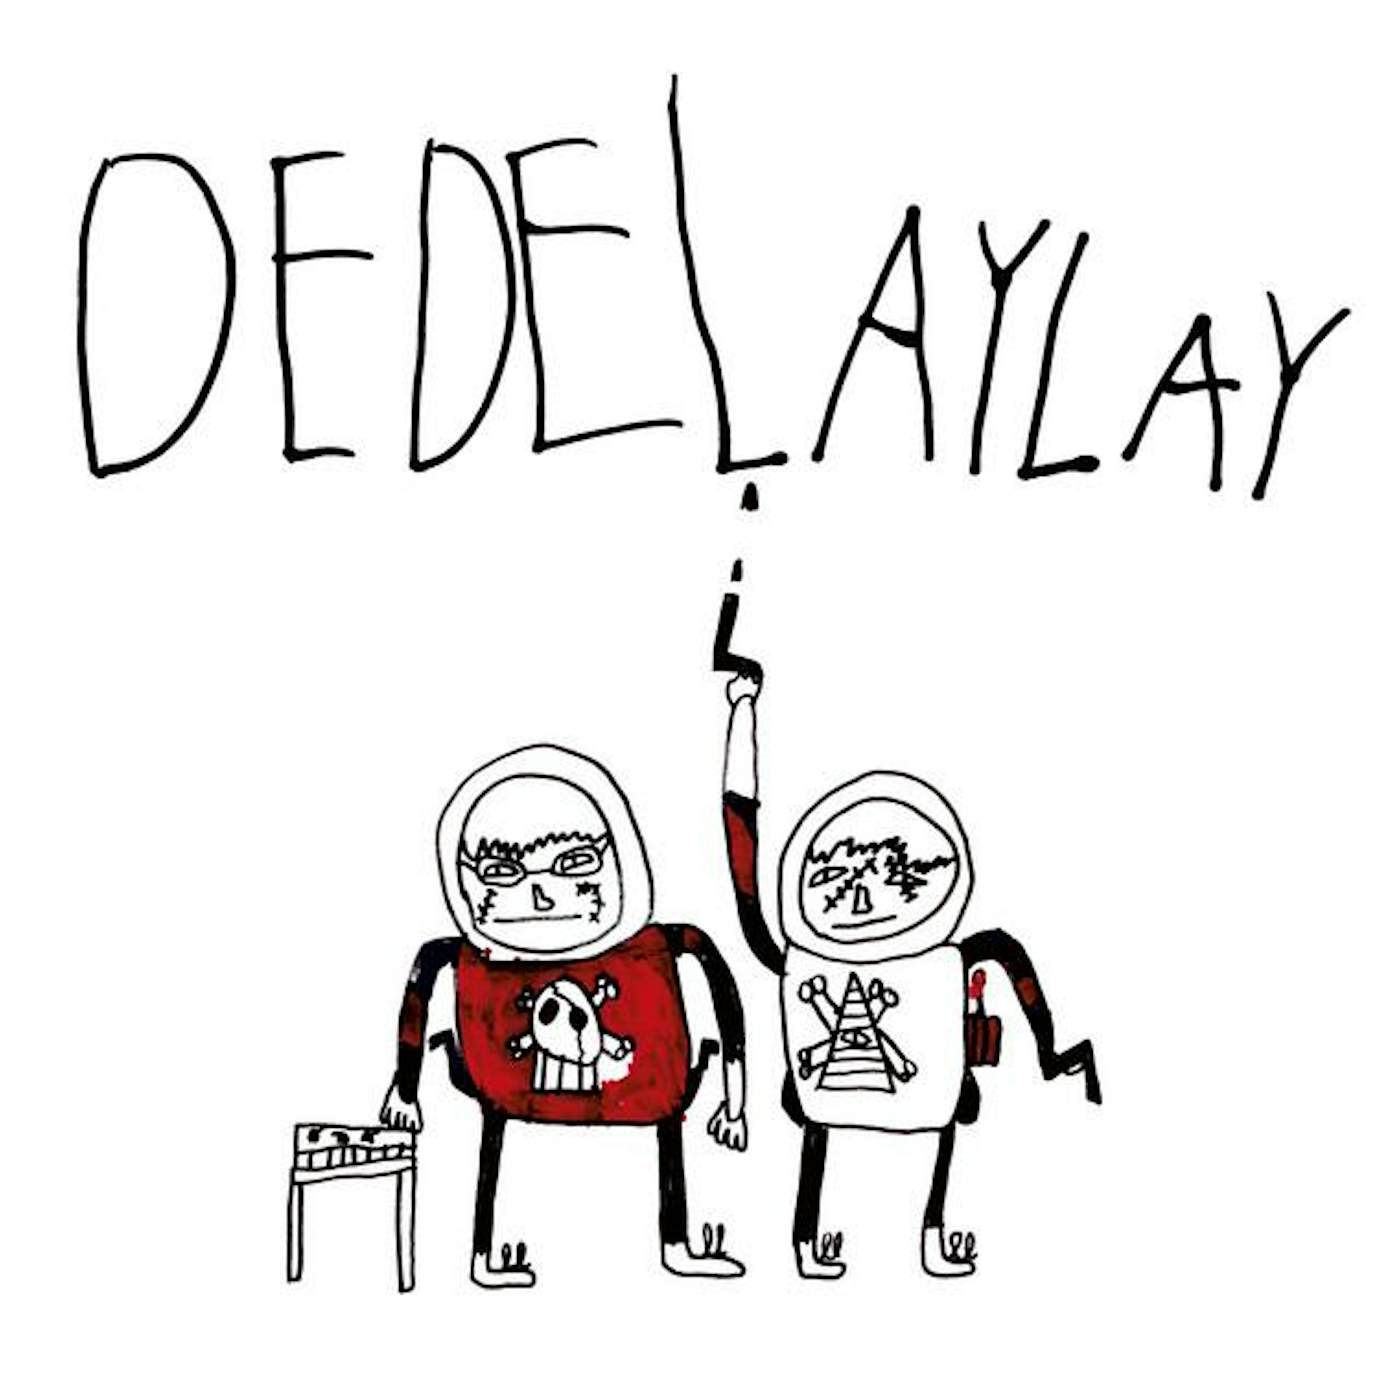 Dedelaylay